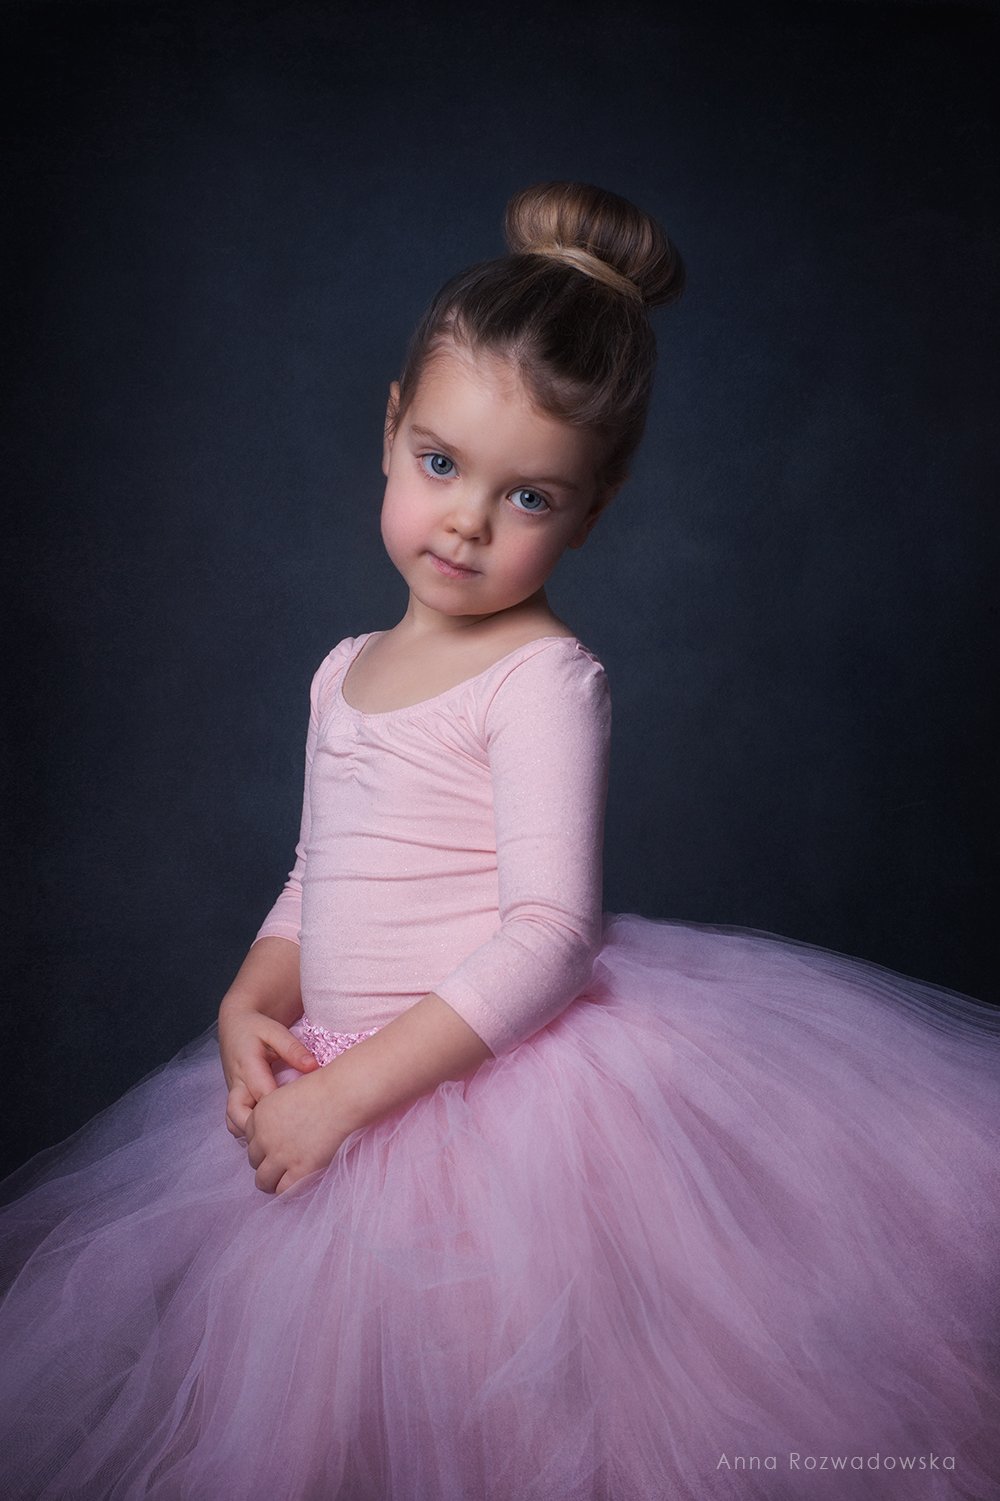 ballet, ballerina, portrait, AnnaRozwadowska